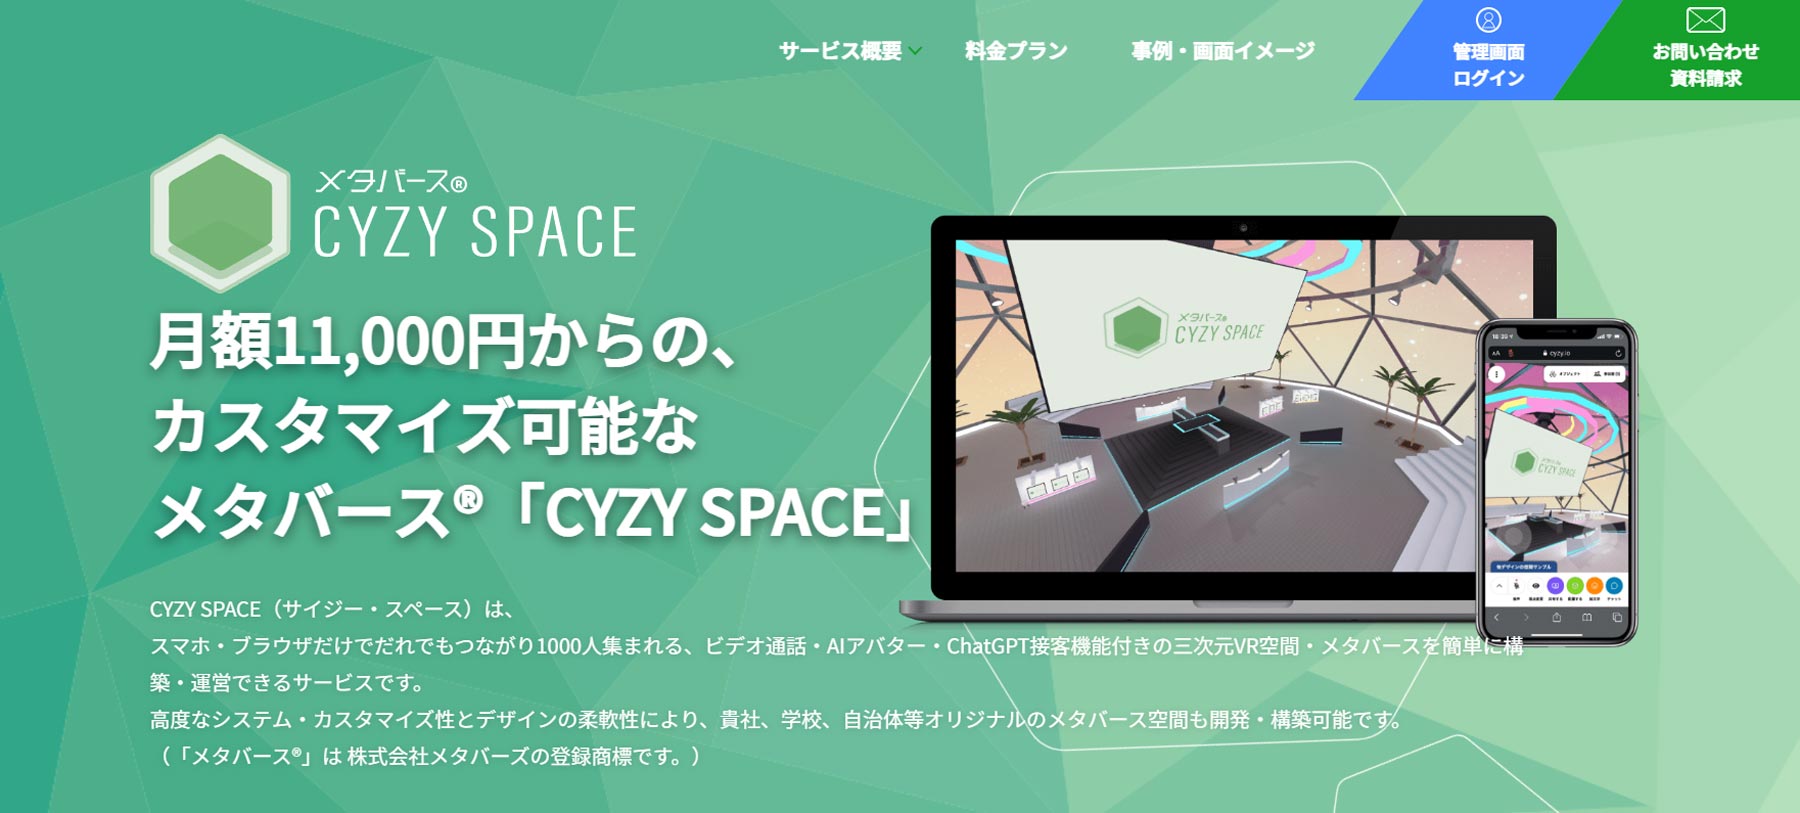 CYZY SPACE公式Webサイト